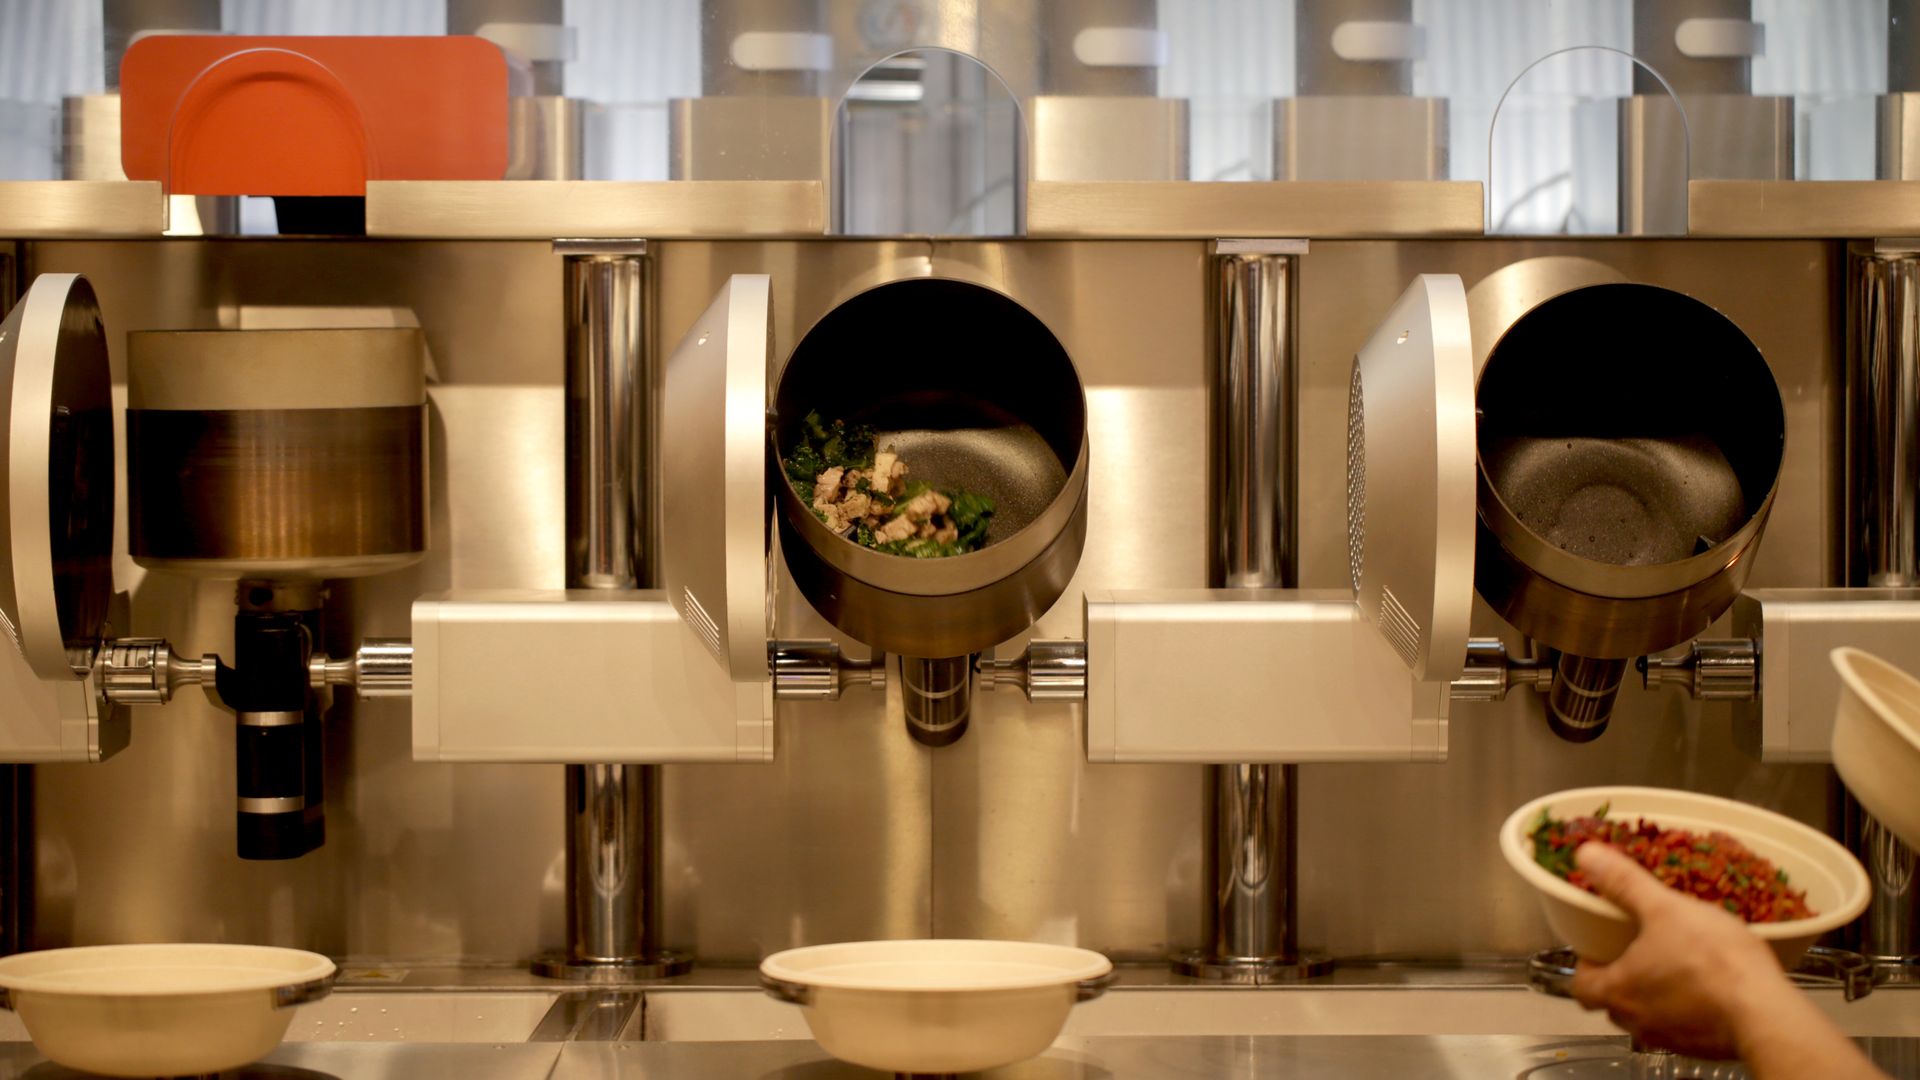 Robots dispensing food